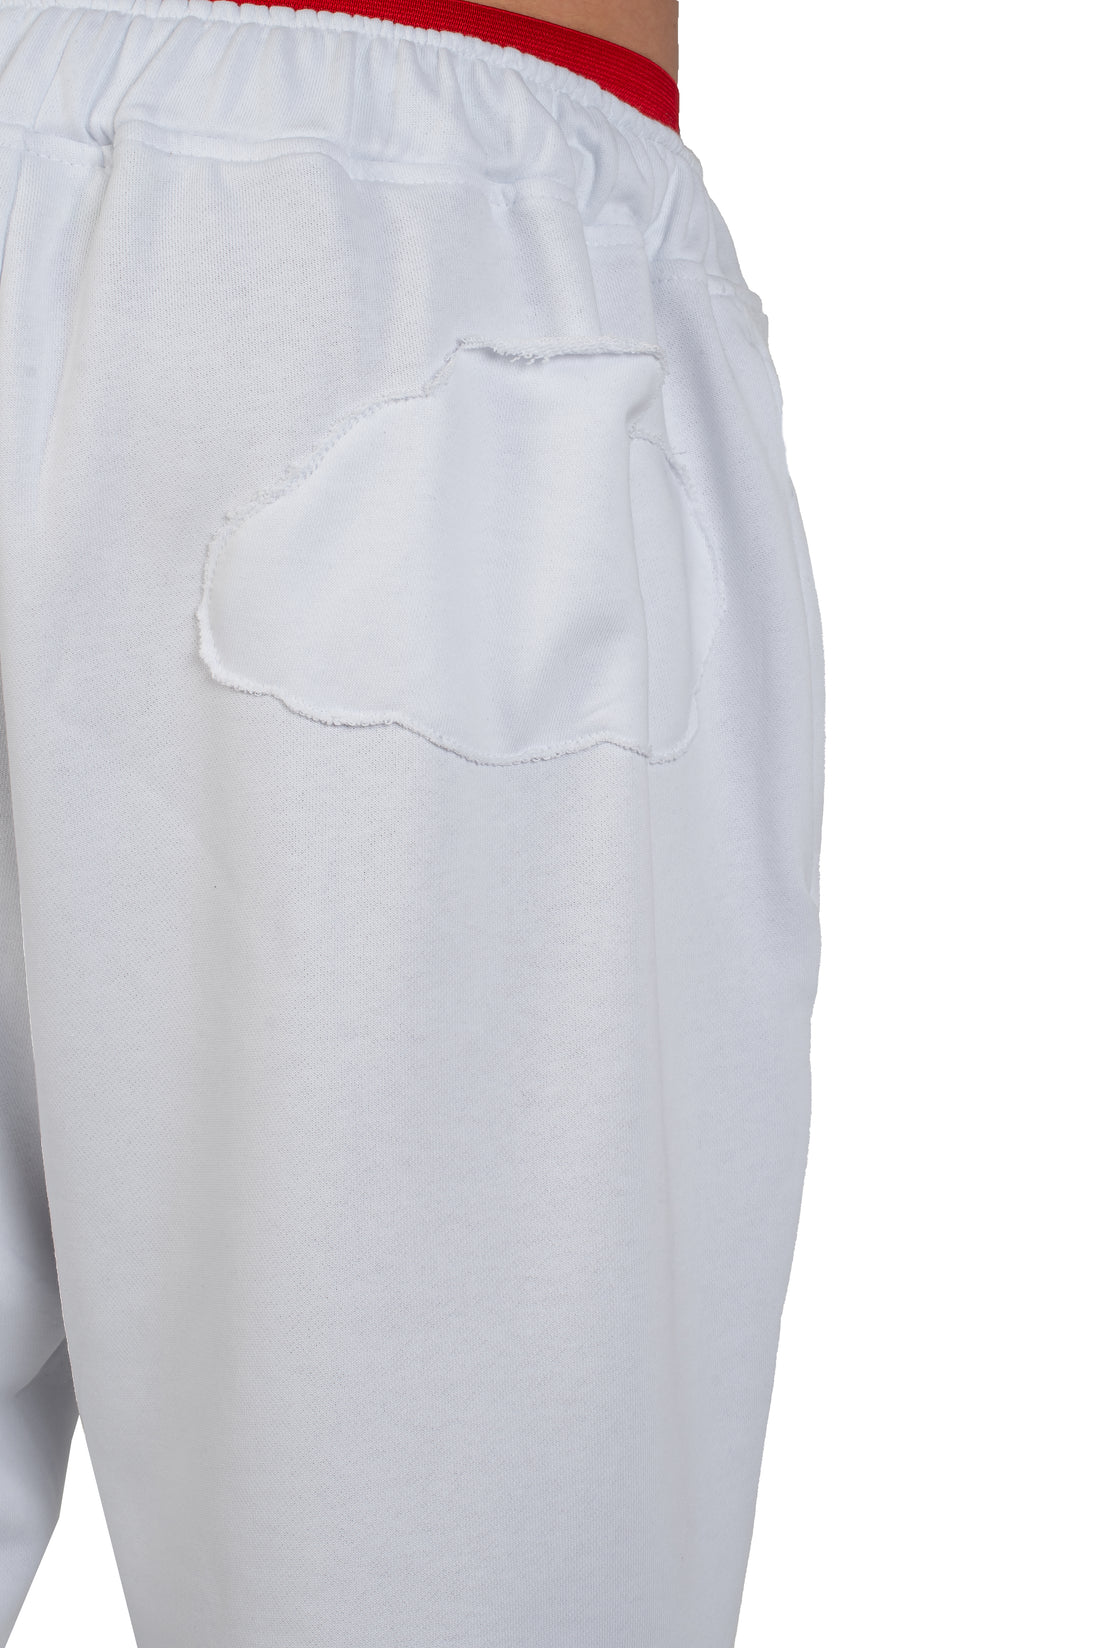 Shop High Quality Women's Baggy Sweatpants - BLANCO AIR – Tagged womens baggy  sweatpants